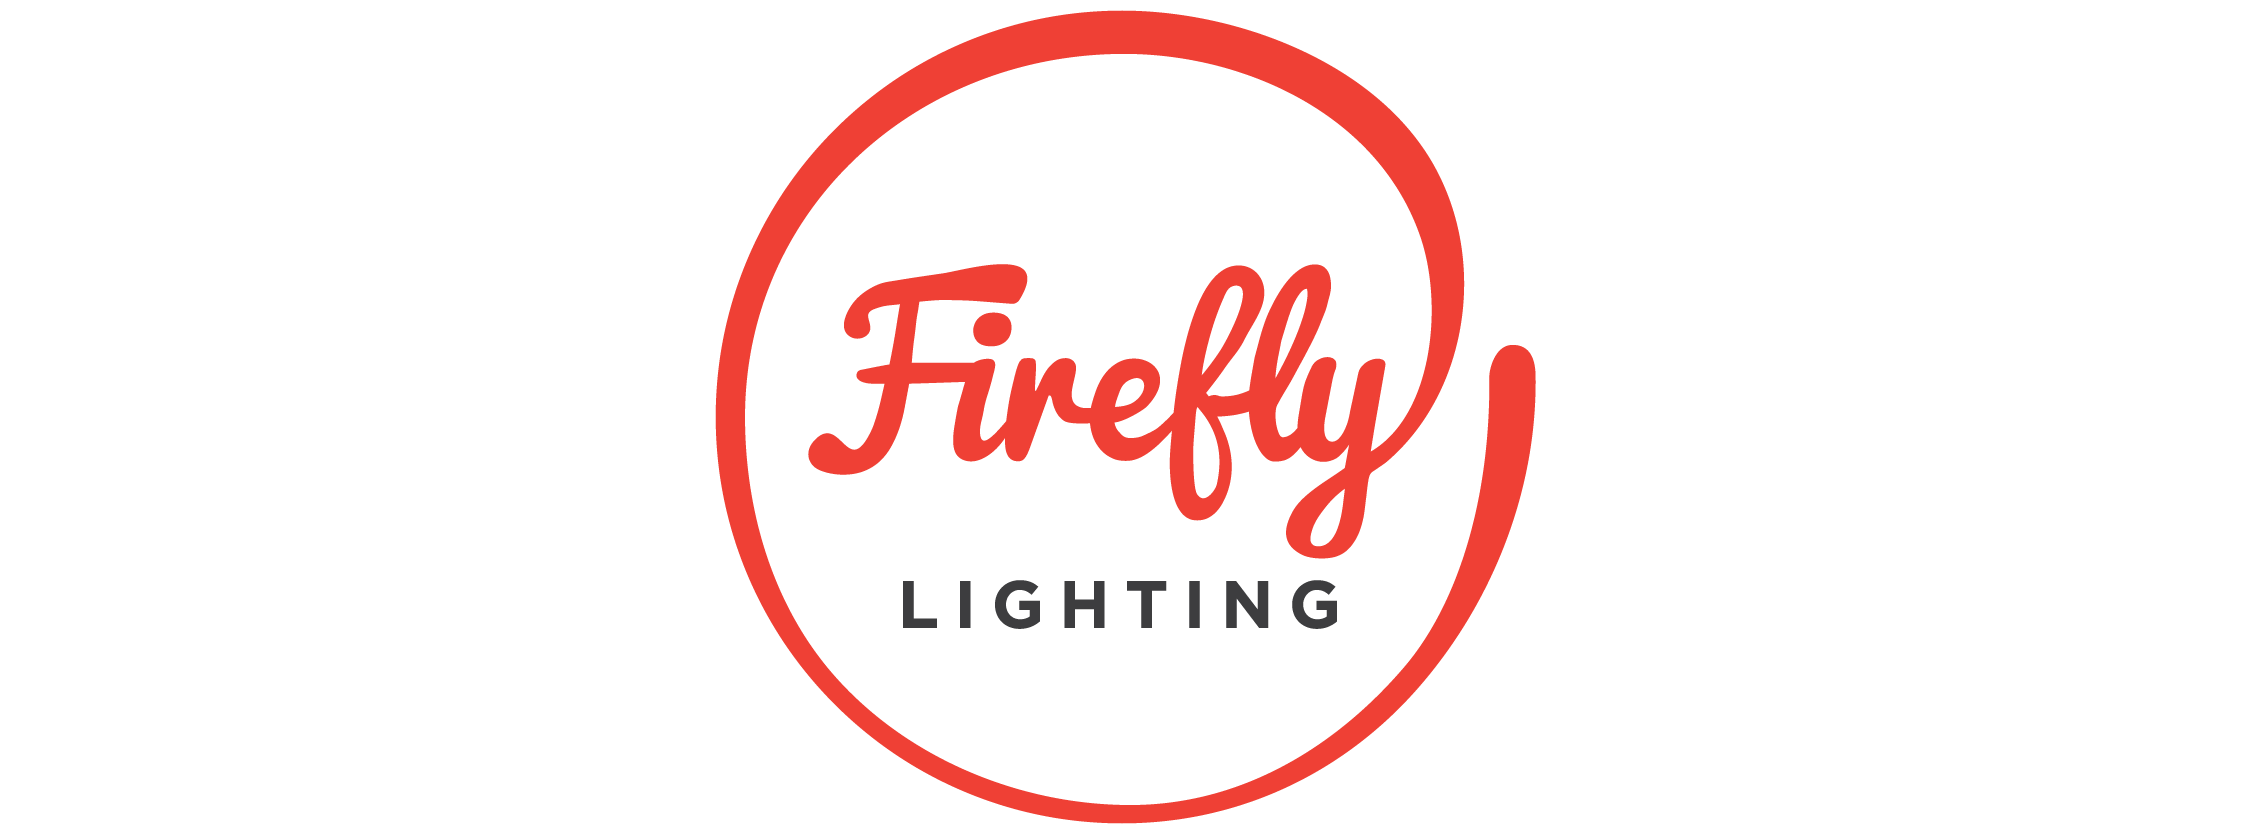 Brand FIREFLY Logos-02.png